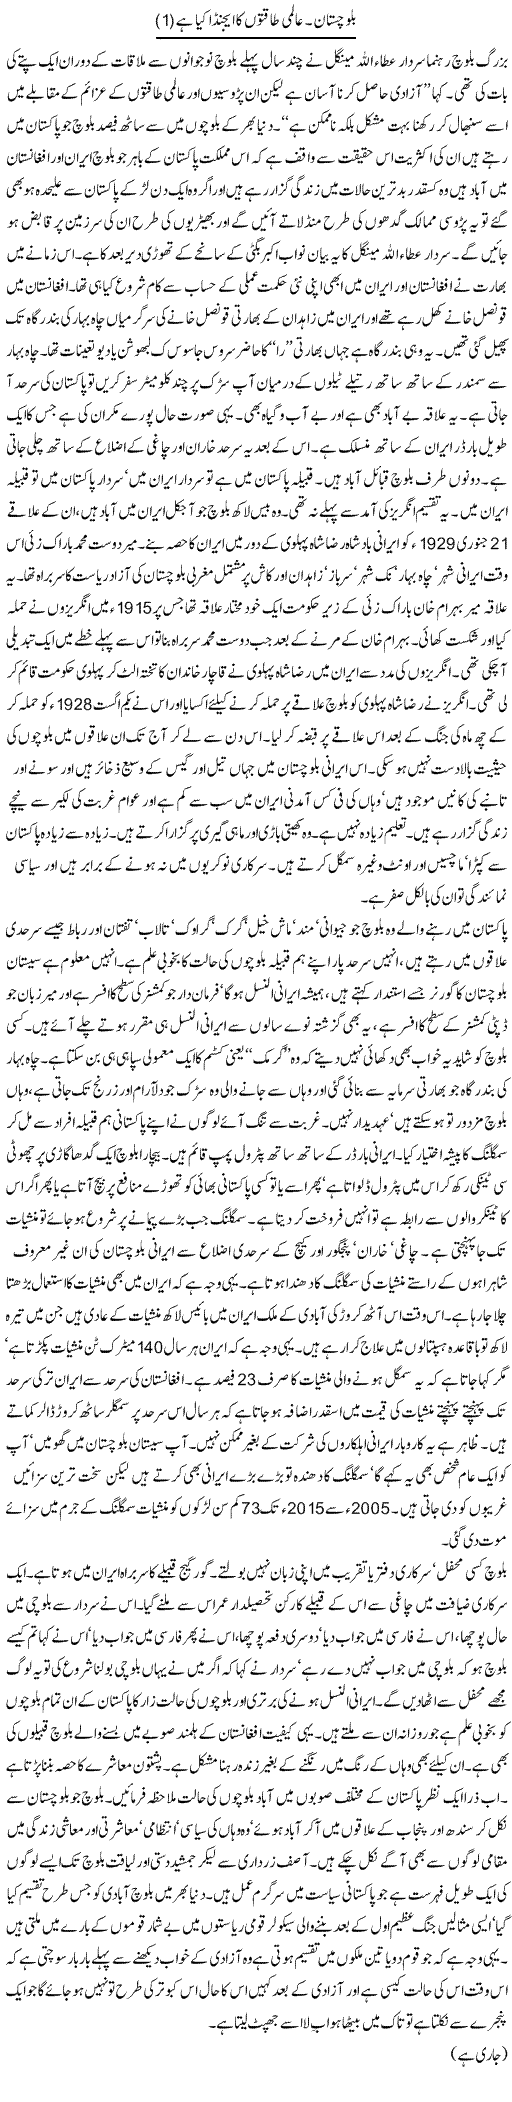 Baluchistan. aalmi taqton ka agenda kia hai (1) | Orya Maqbool Jan | Daily Urdu Columns